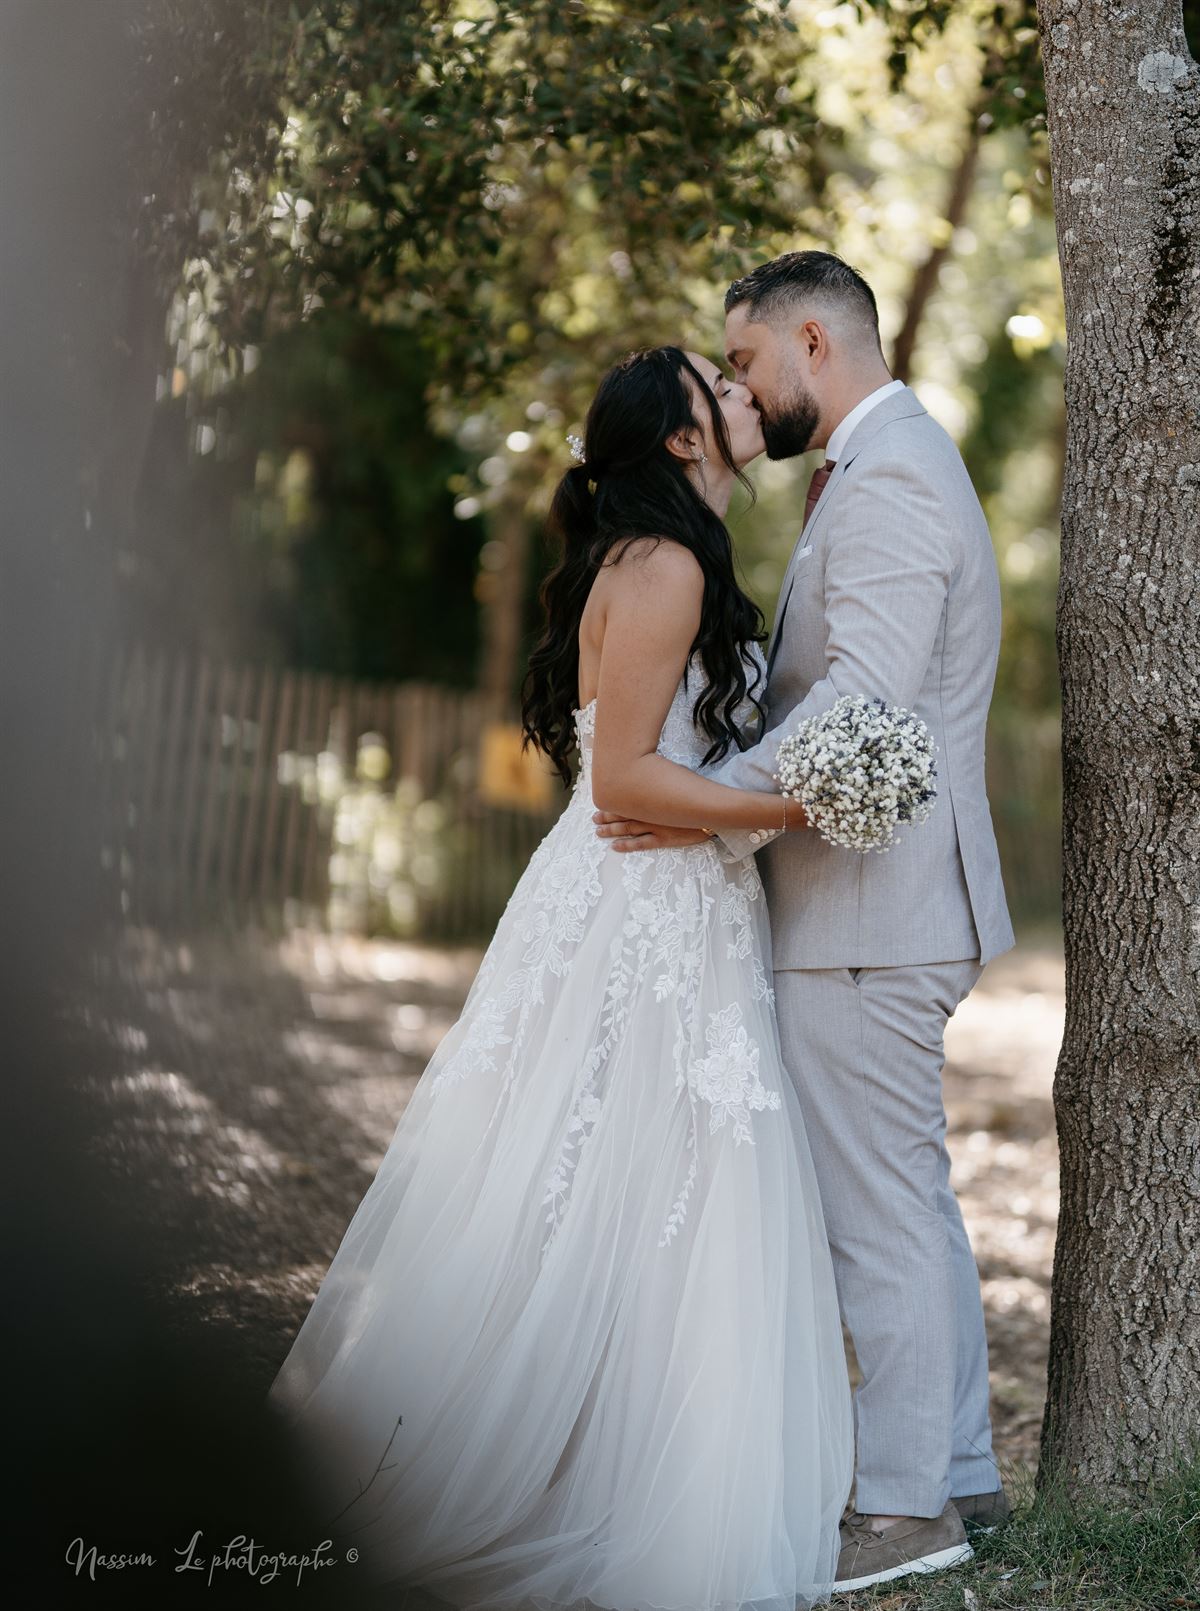 Wedding Photographer Aix en Provence: Capturing Love's Embrace 15